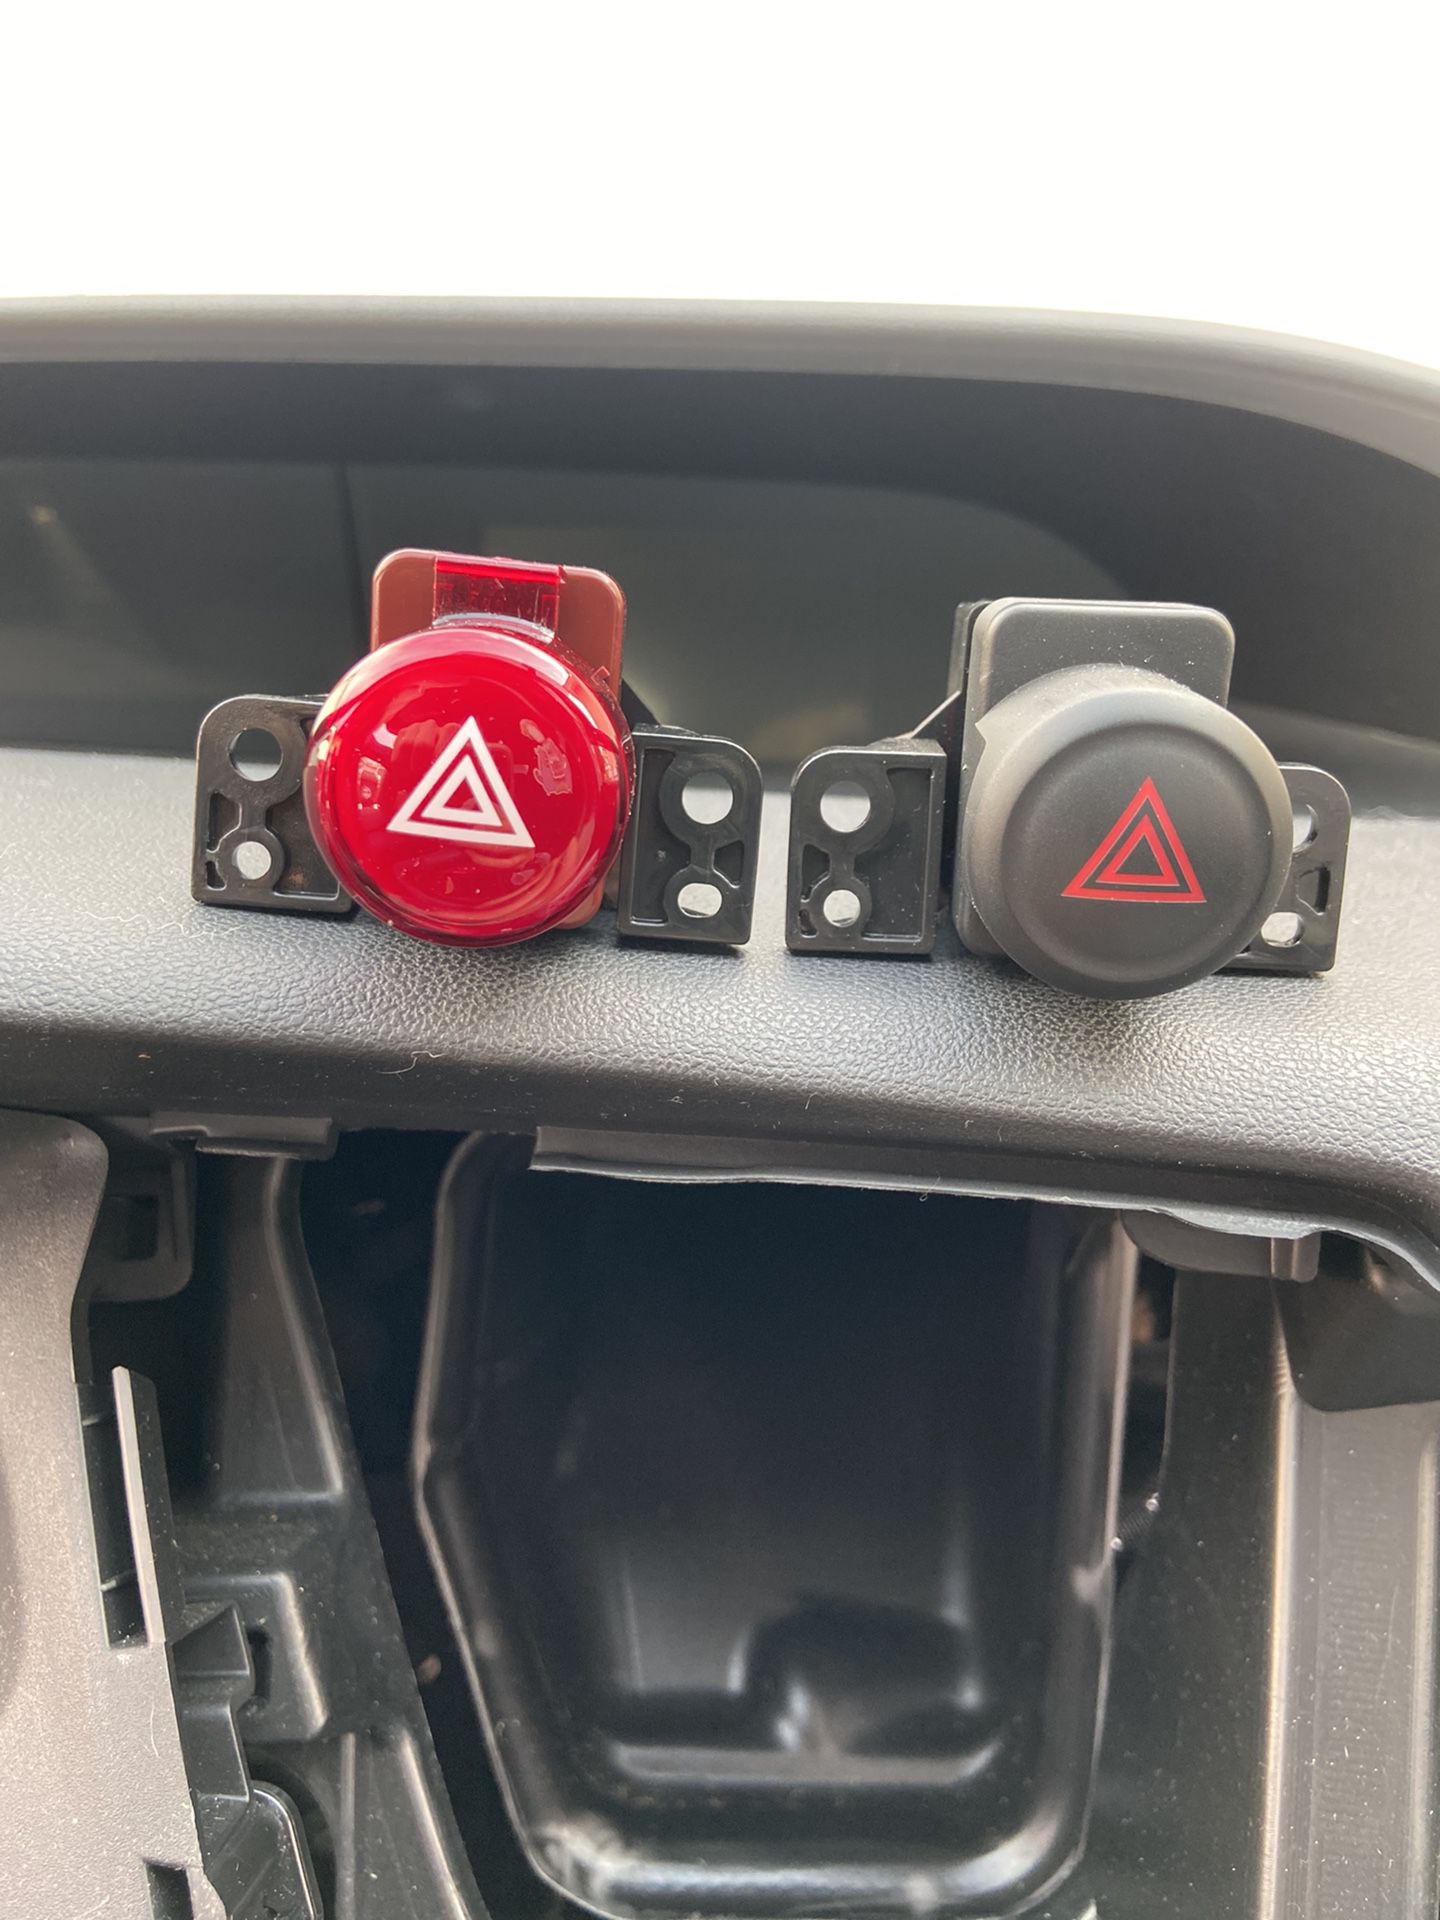 13-15 Honda Civic “JDM” Red Hazard Button